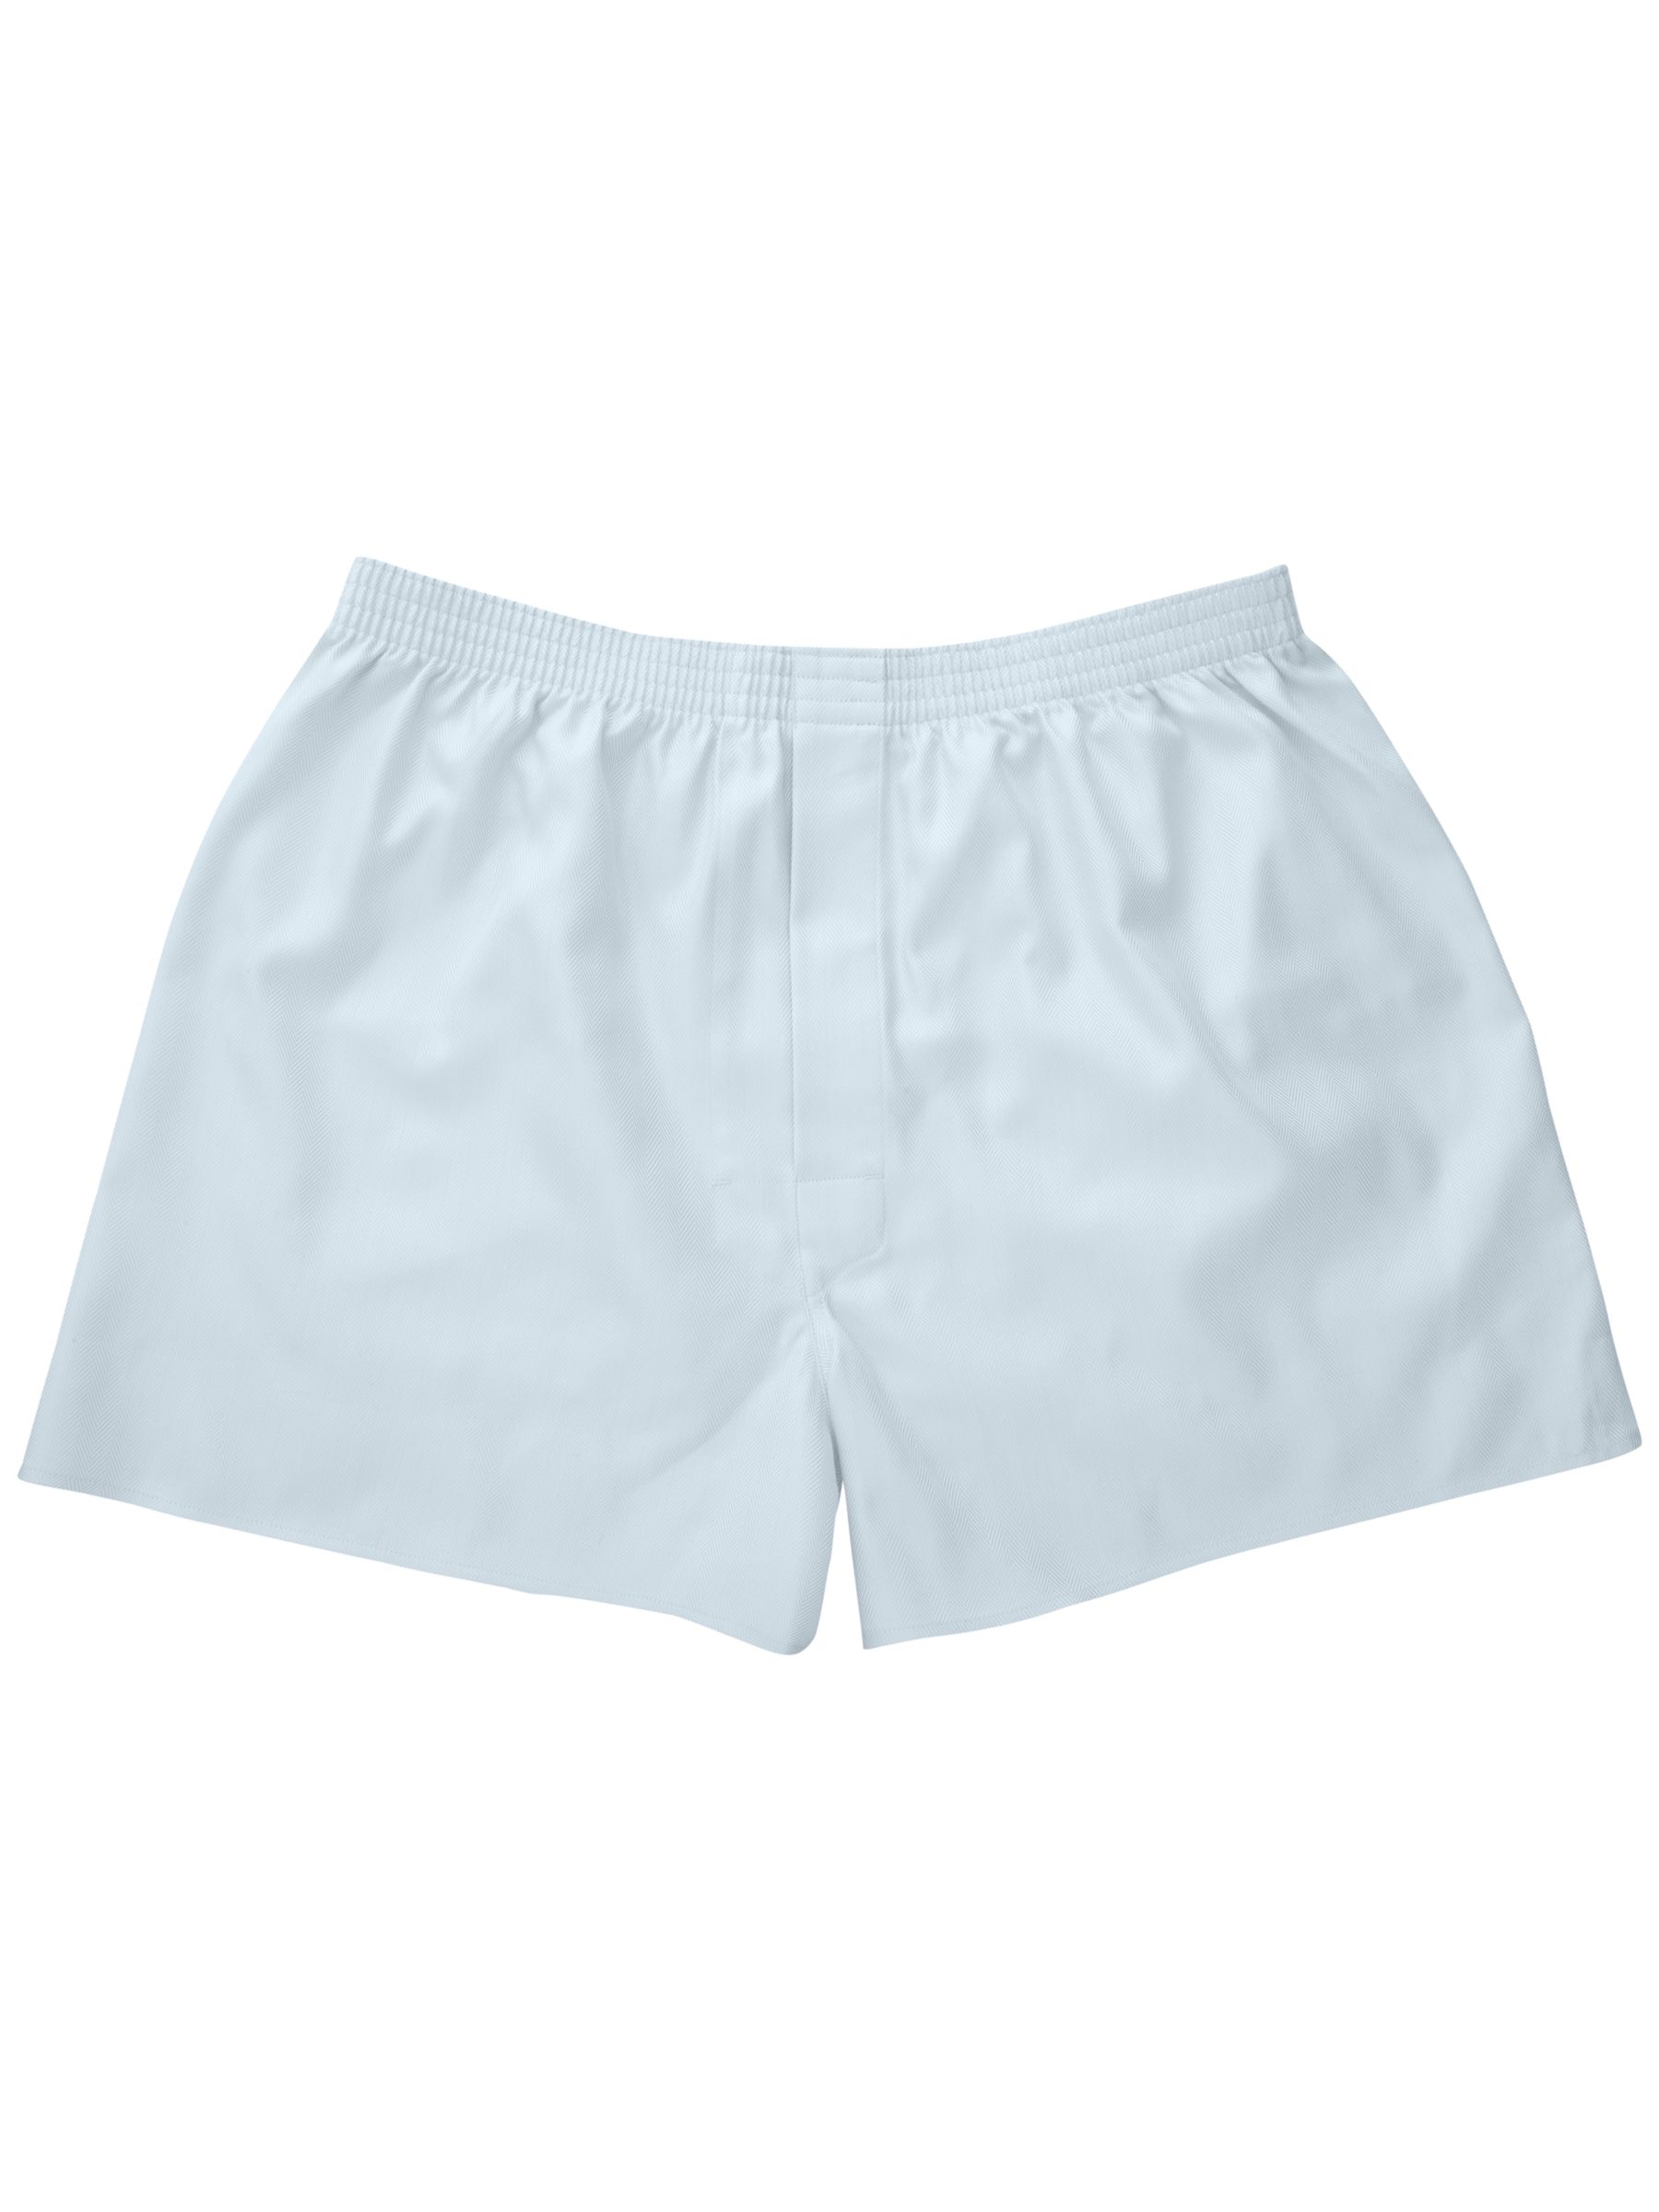 Thomas Pink Abson Herringbone Cotton Boxer Shorts, Pale Blue, S